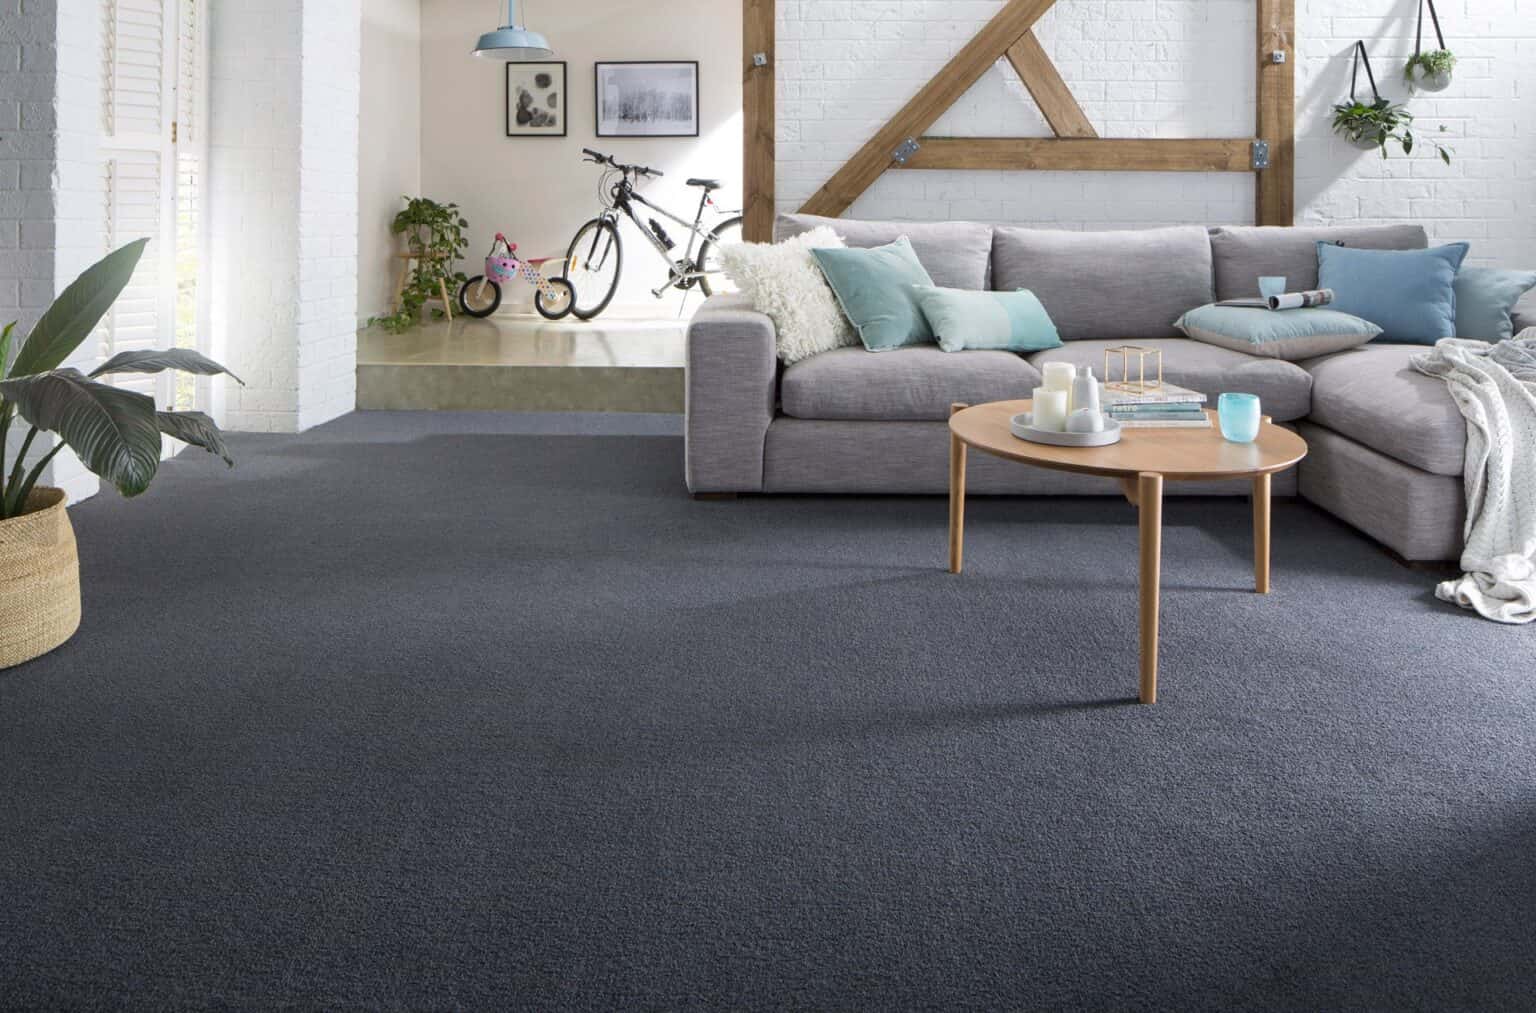 Carpet-flooring-1536x1013-min